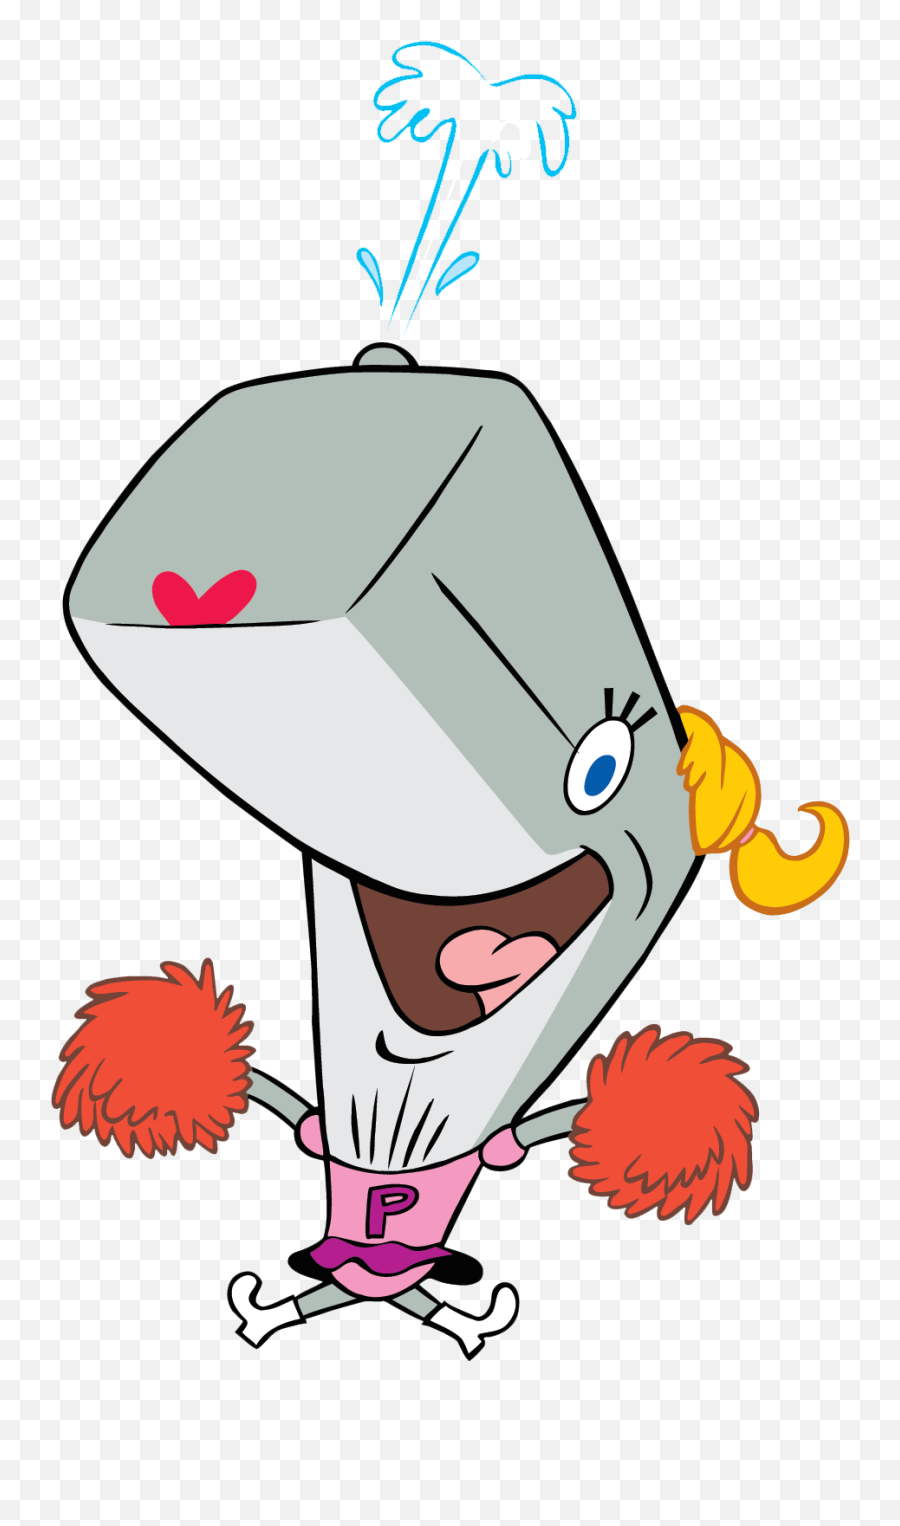 Spongebob Characters Png Image - Pearl Krabs,Spongebob Transparent Background